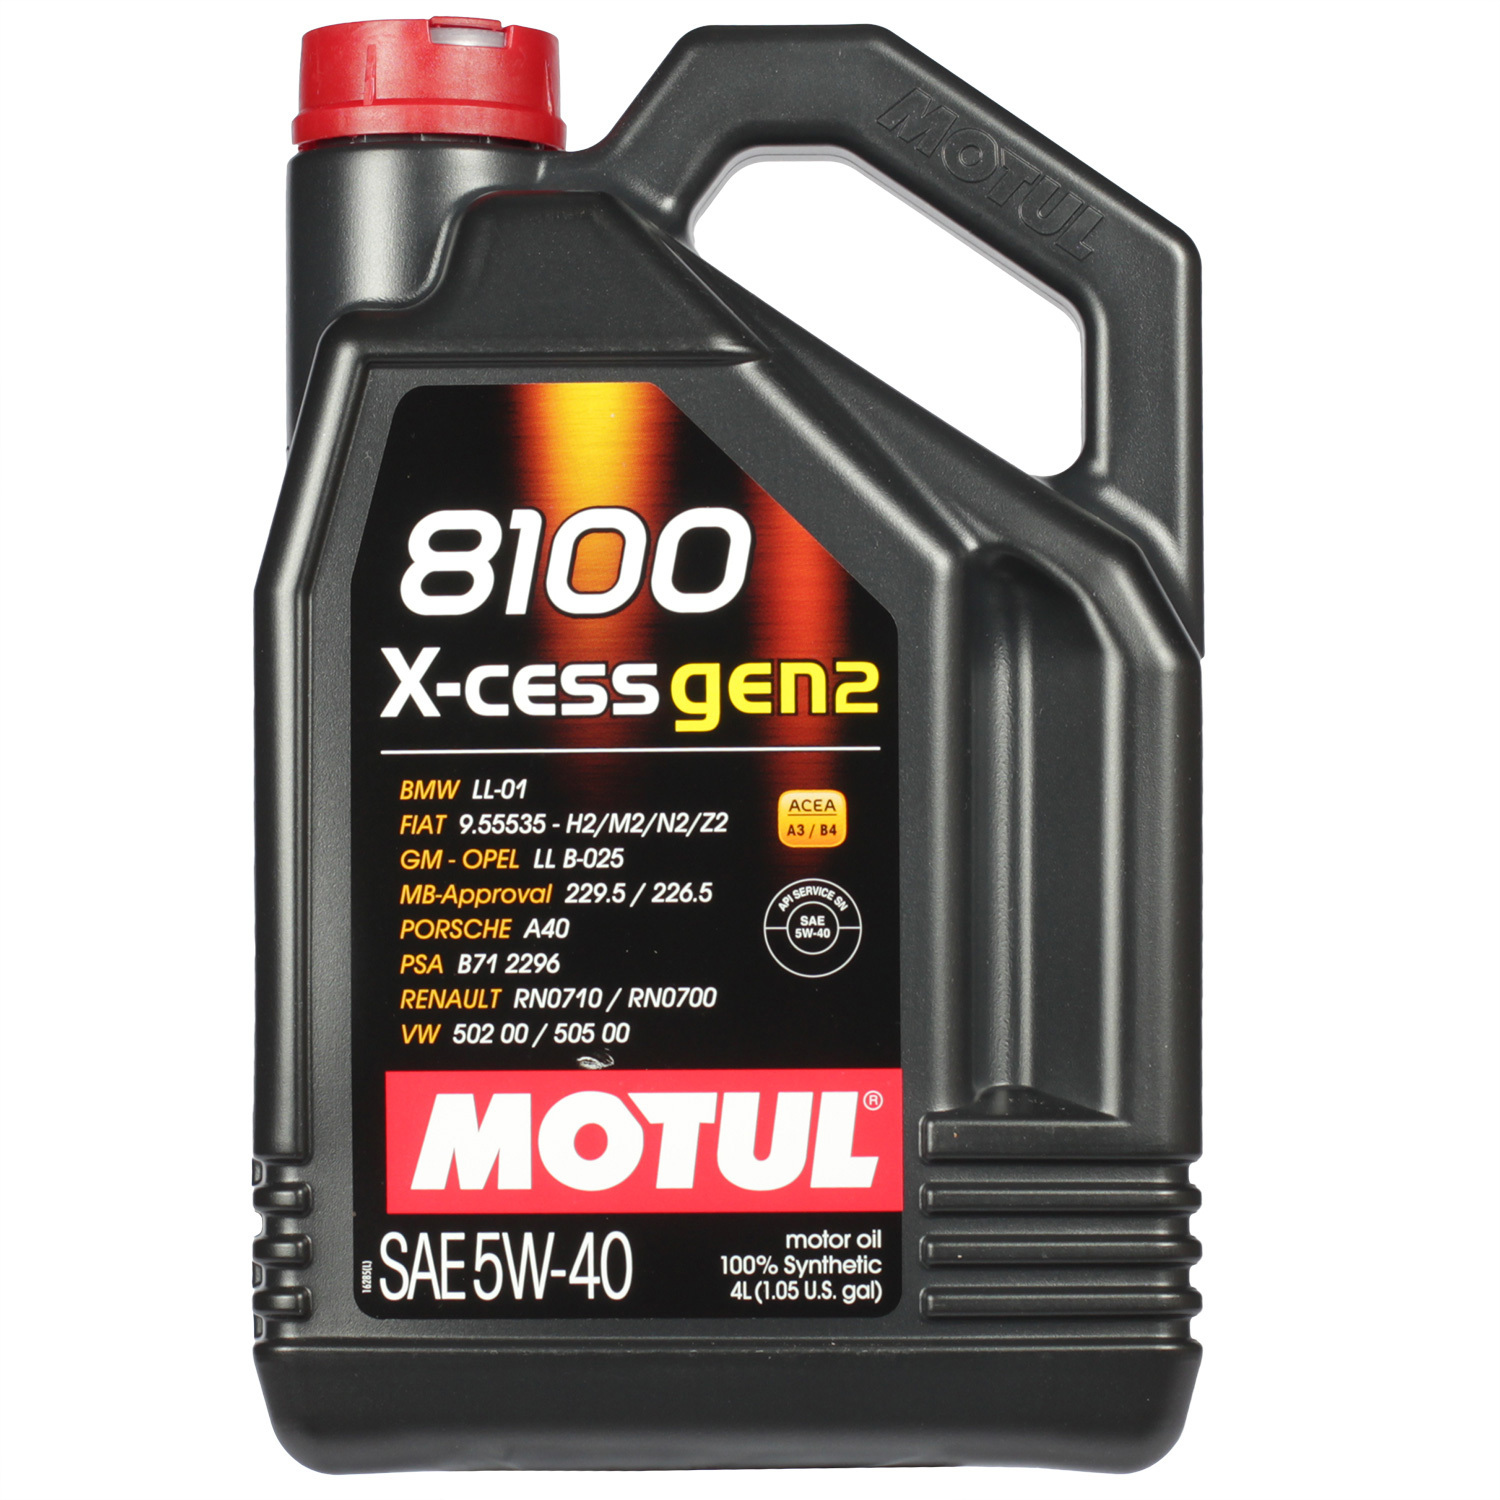 Motul Моторное масло Motul 8100 X-cess gen2 5W-40, 4 л motul 8100 eco nergy 5w 30 1л